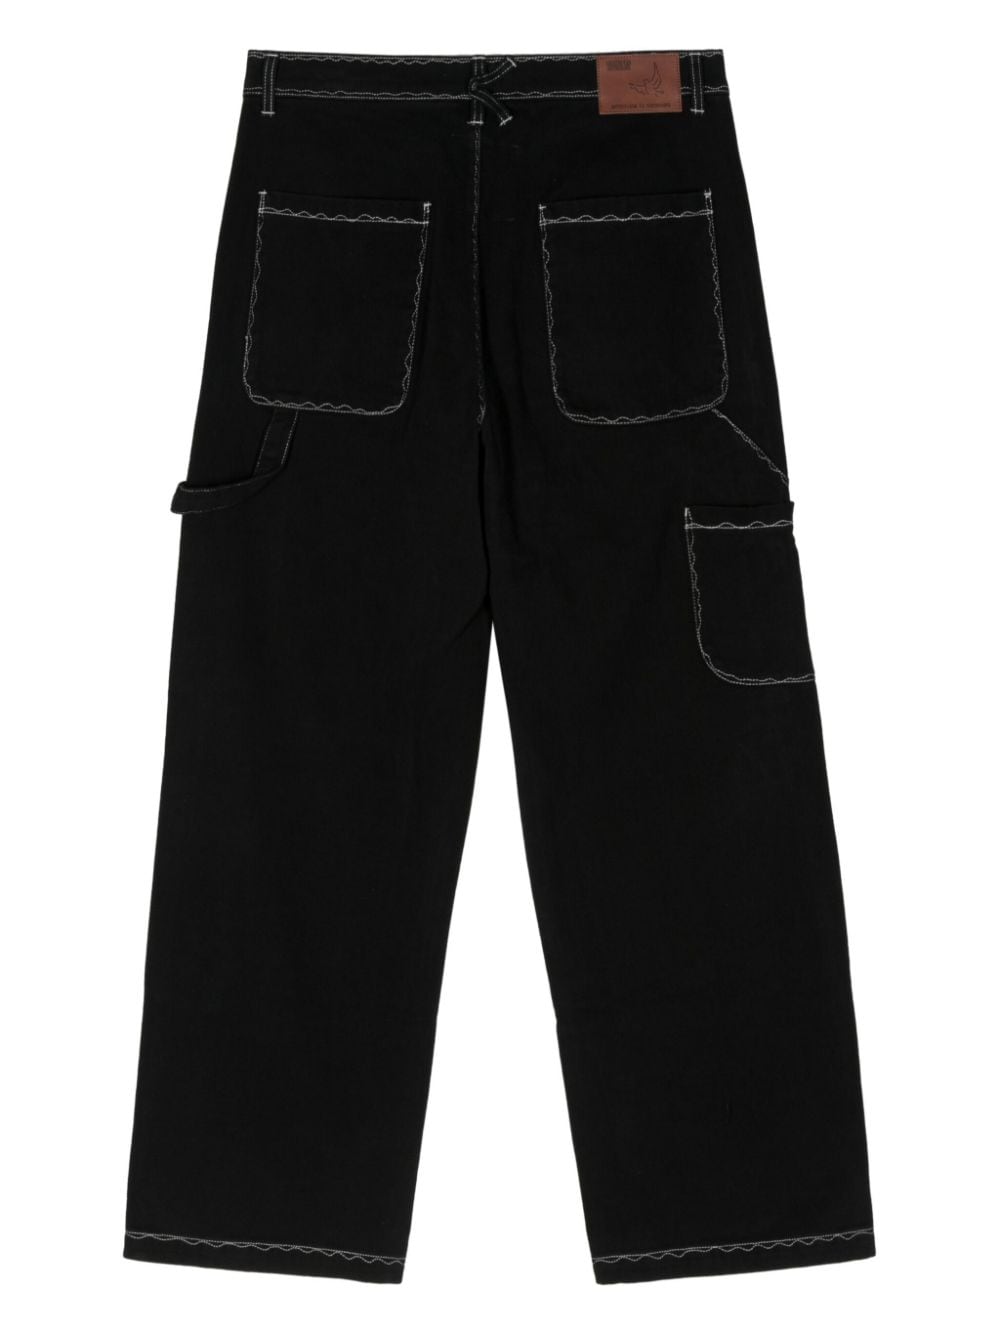 KidSuper Messy Stitched work-style trousers - Zwart